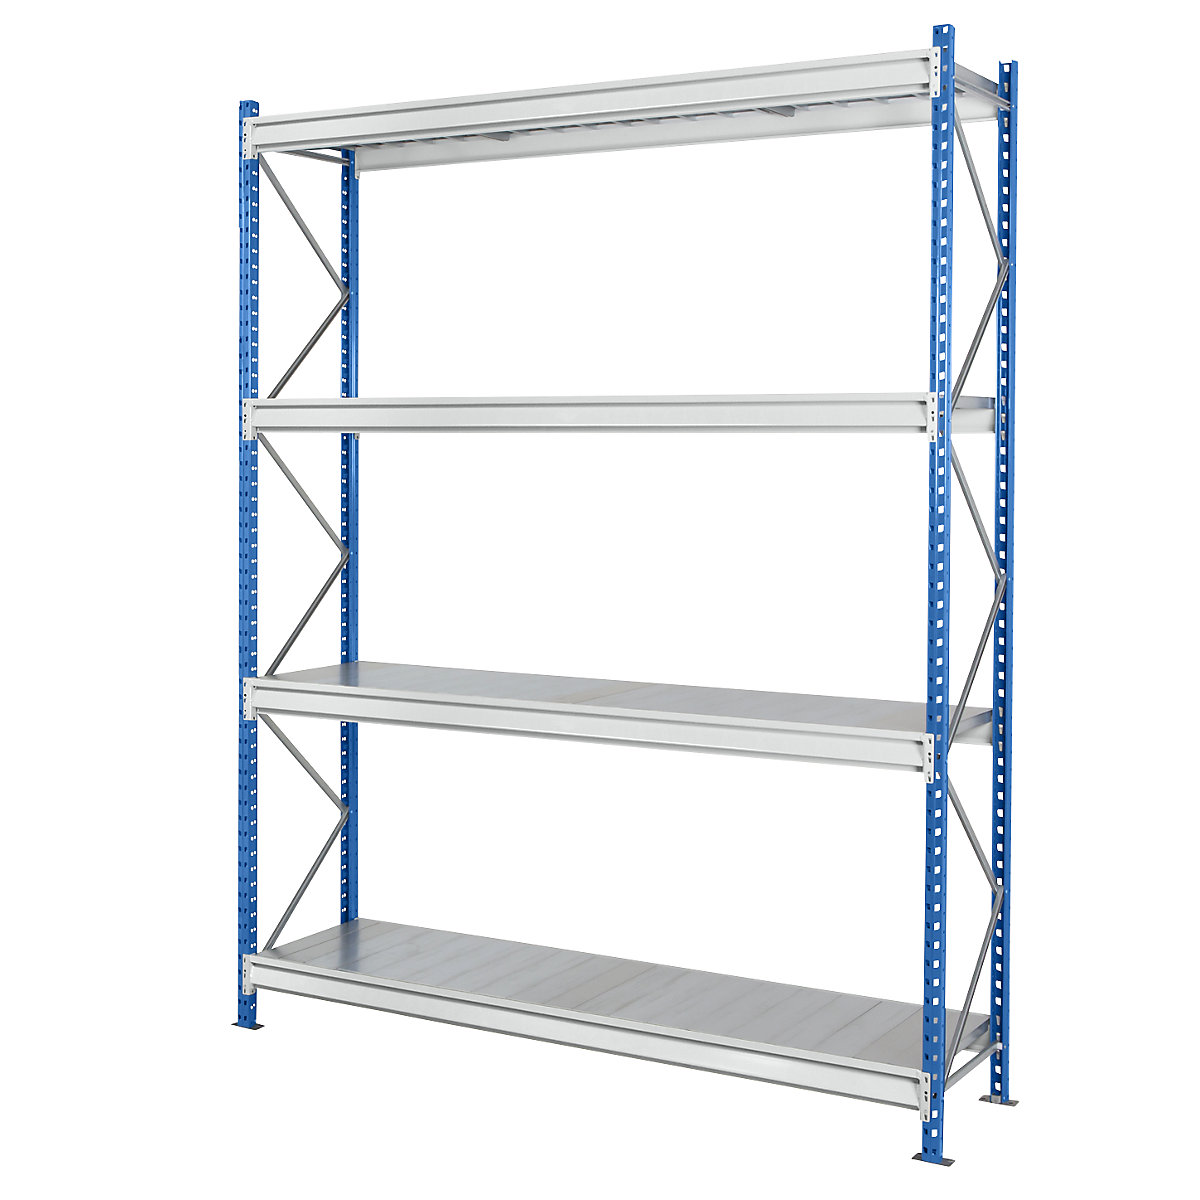 Heavy duty wide span shelving with steel shelf panels, frame colour blue, HxWxD 2996 x 2410 x 1000 mm, standard shelf unit-12